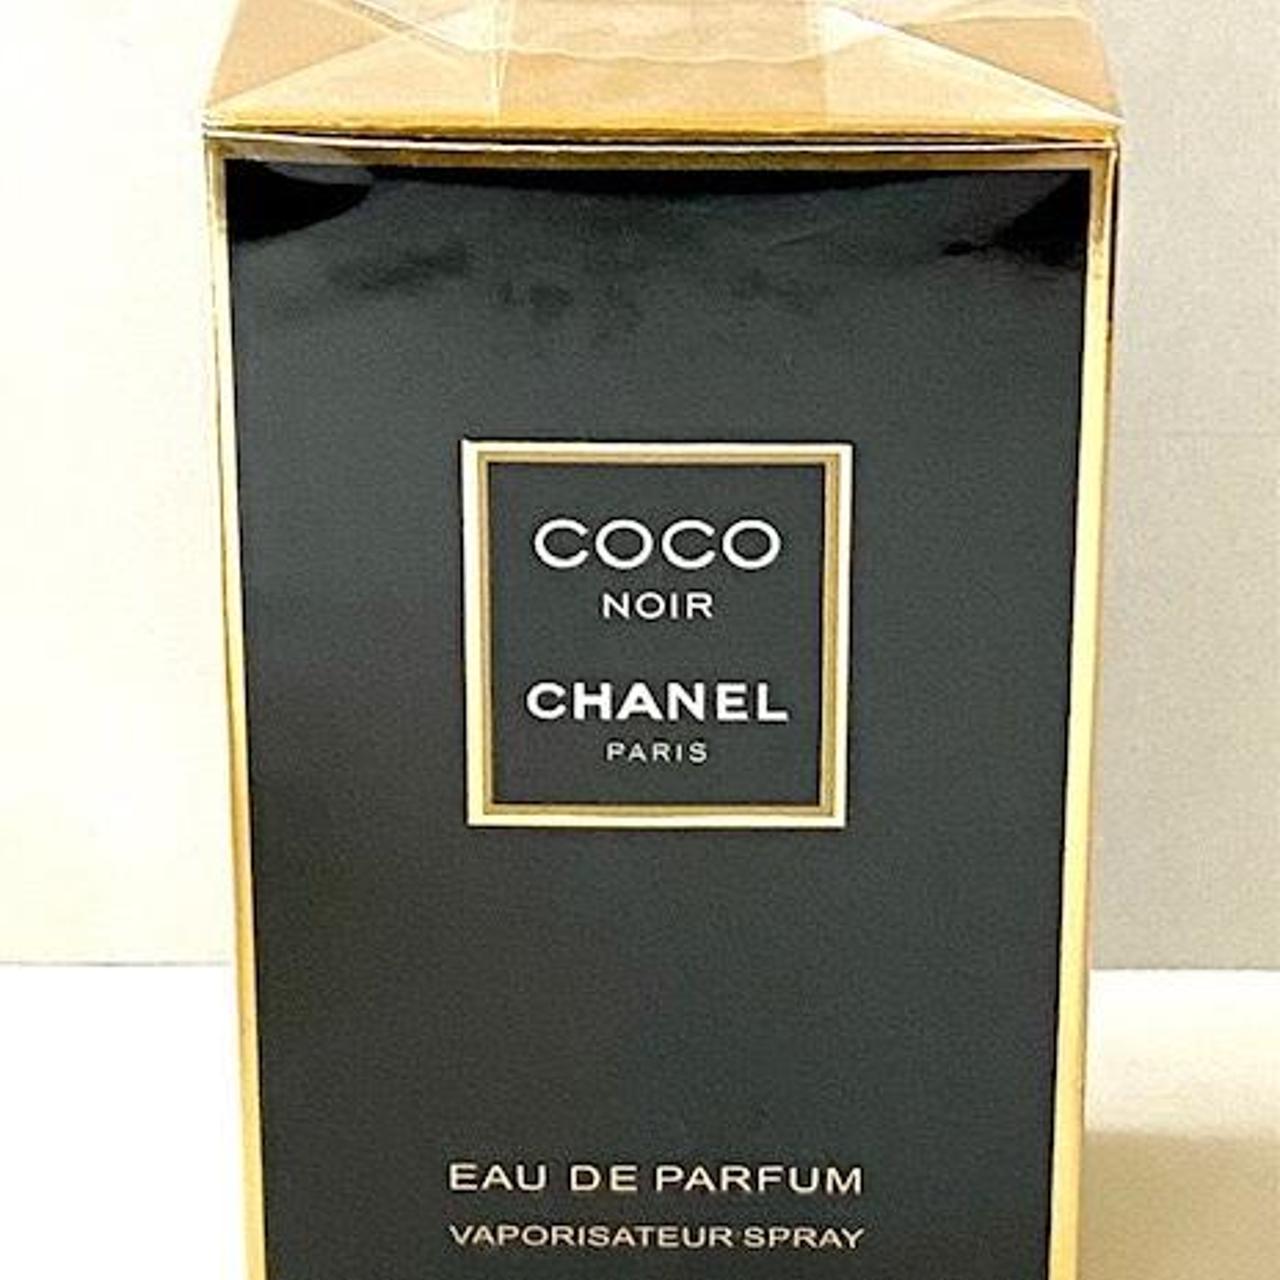 Chanel COCO NOIR Eau de Parfum Spray, 3.4 oz / 100 ml